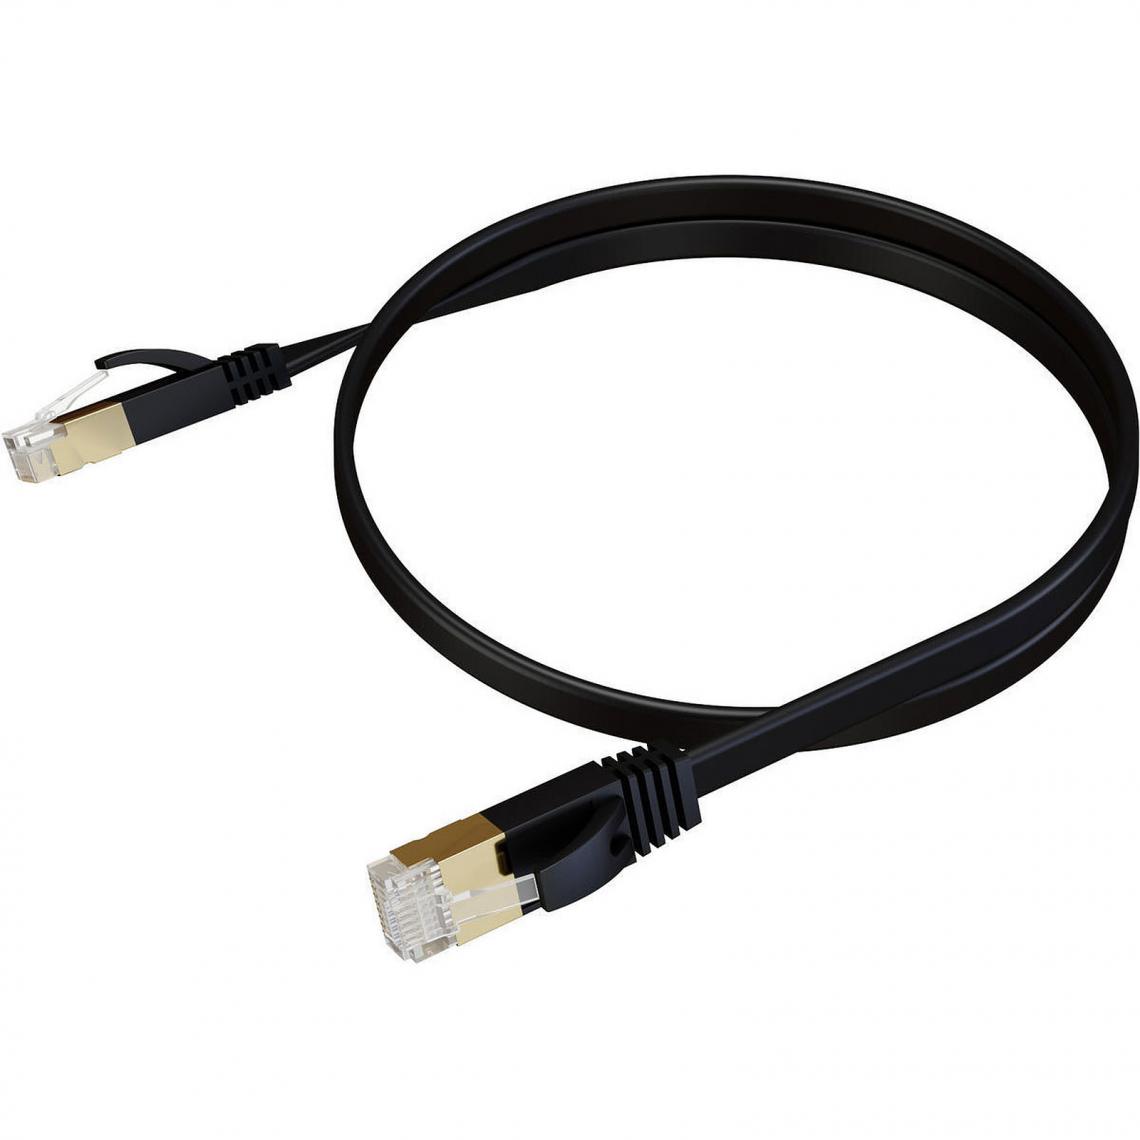 Real cable - E-NET 600-2 (5 m) - Câble antenne